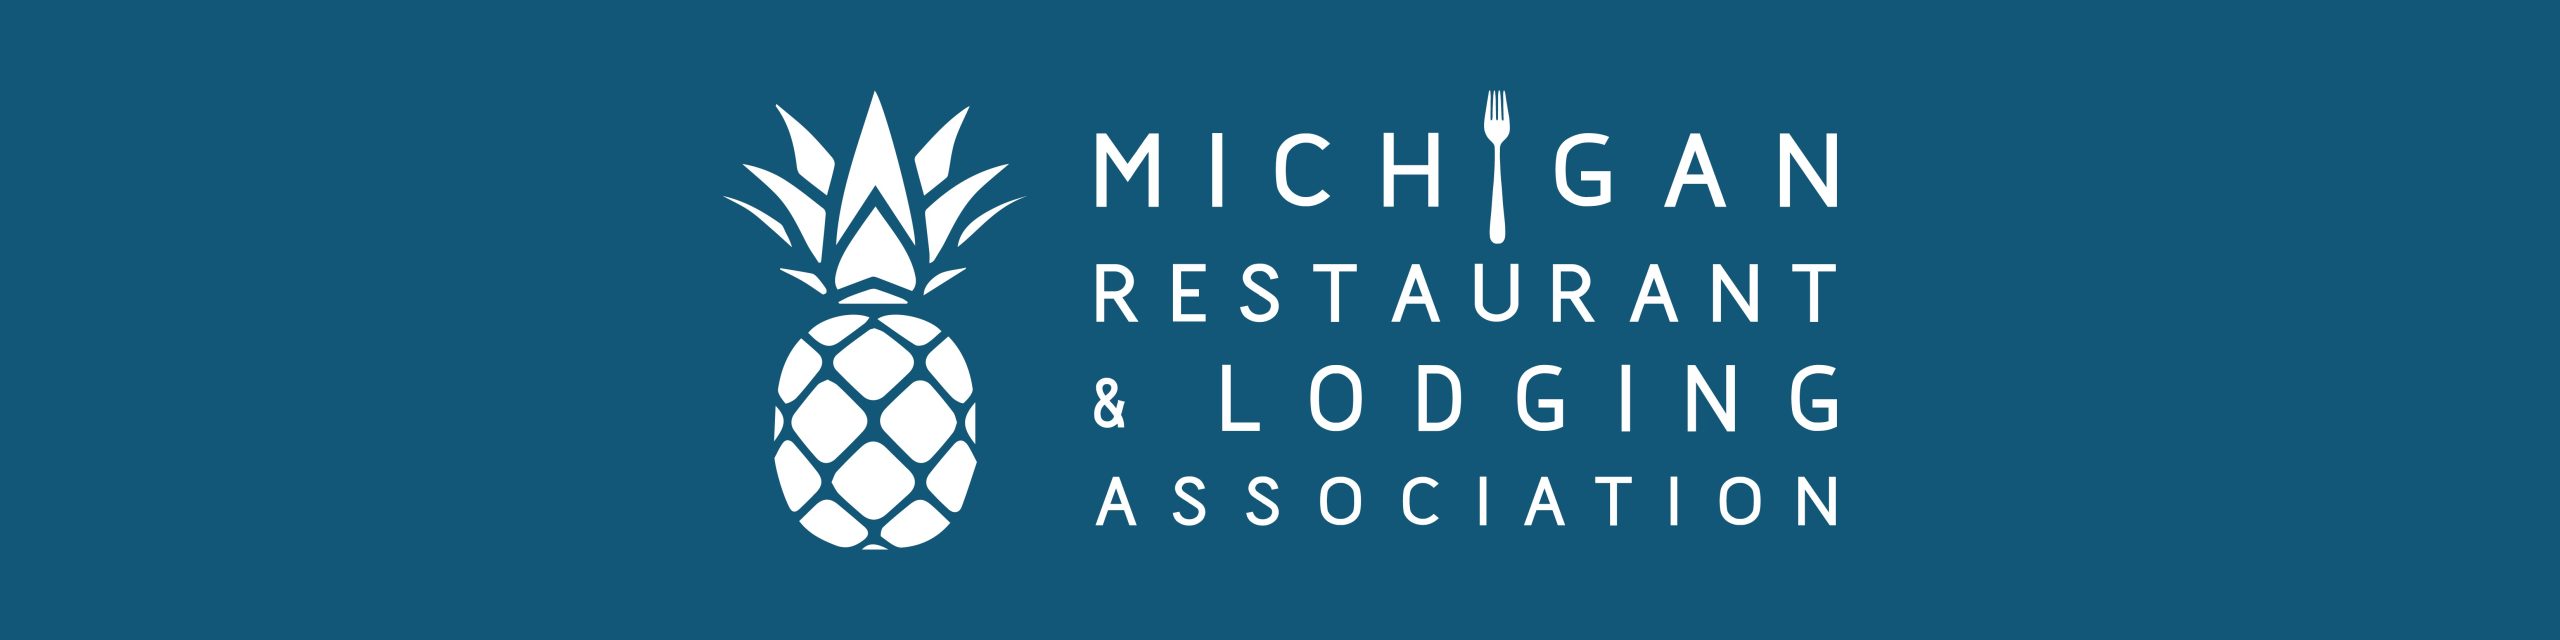 Image: Welcome Michigan Restaurant & Lodging Association!